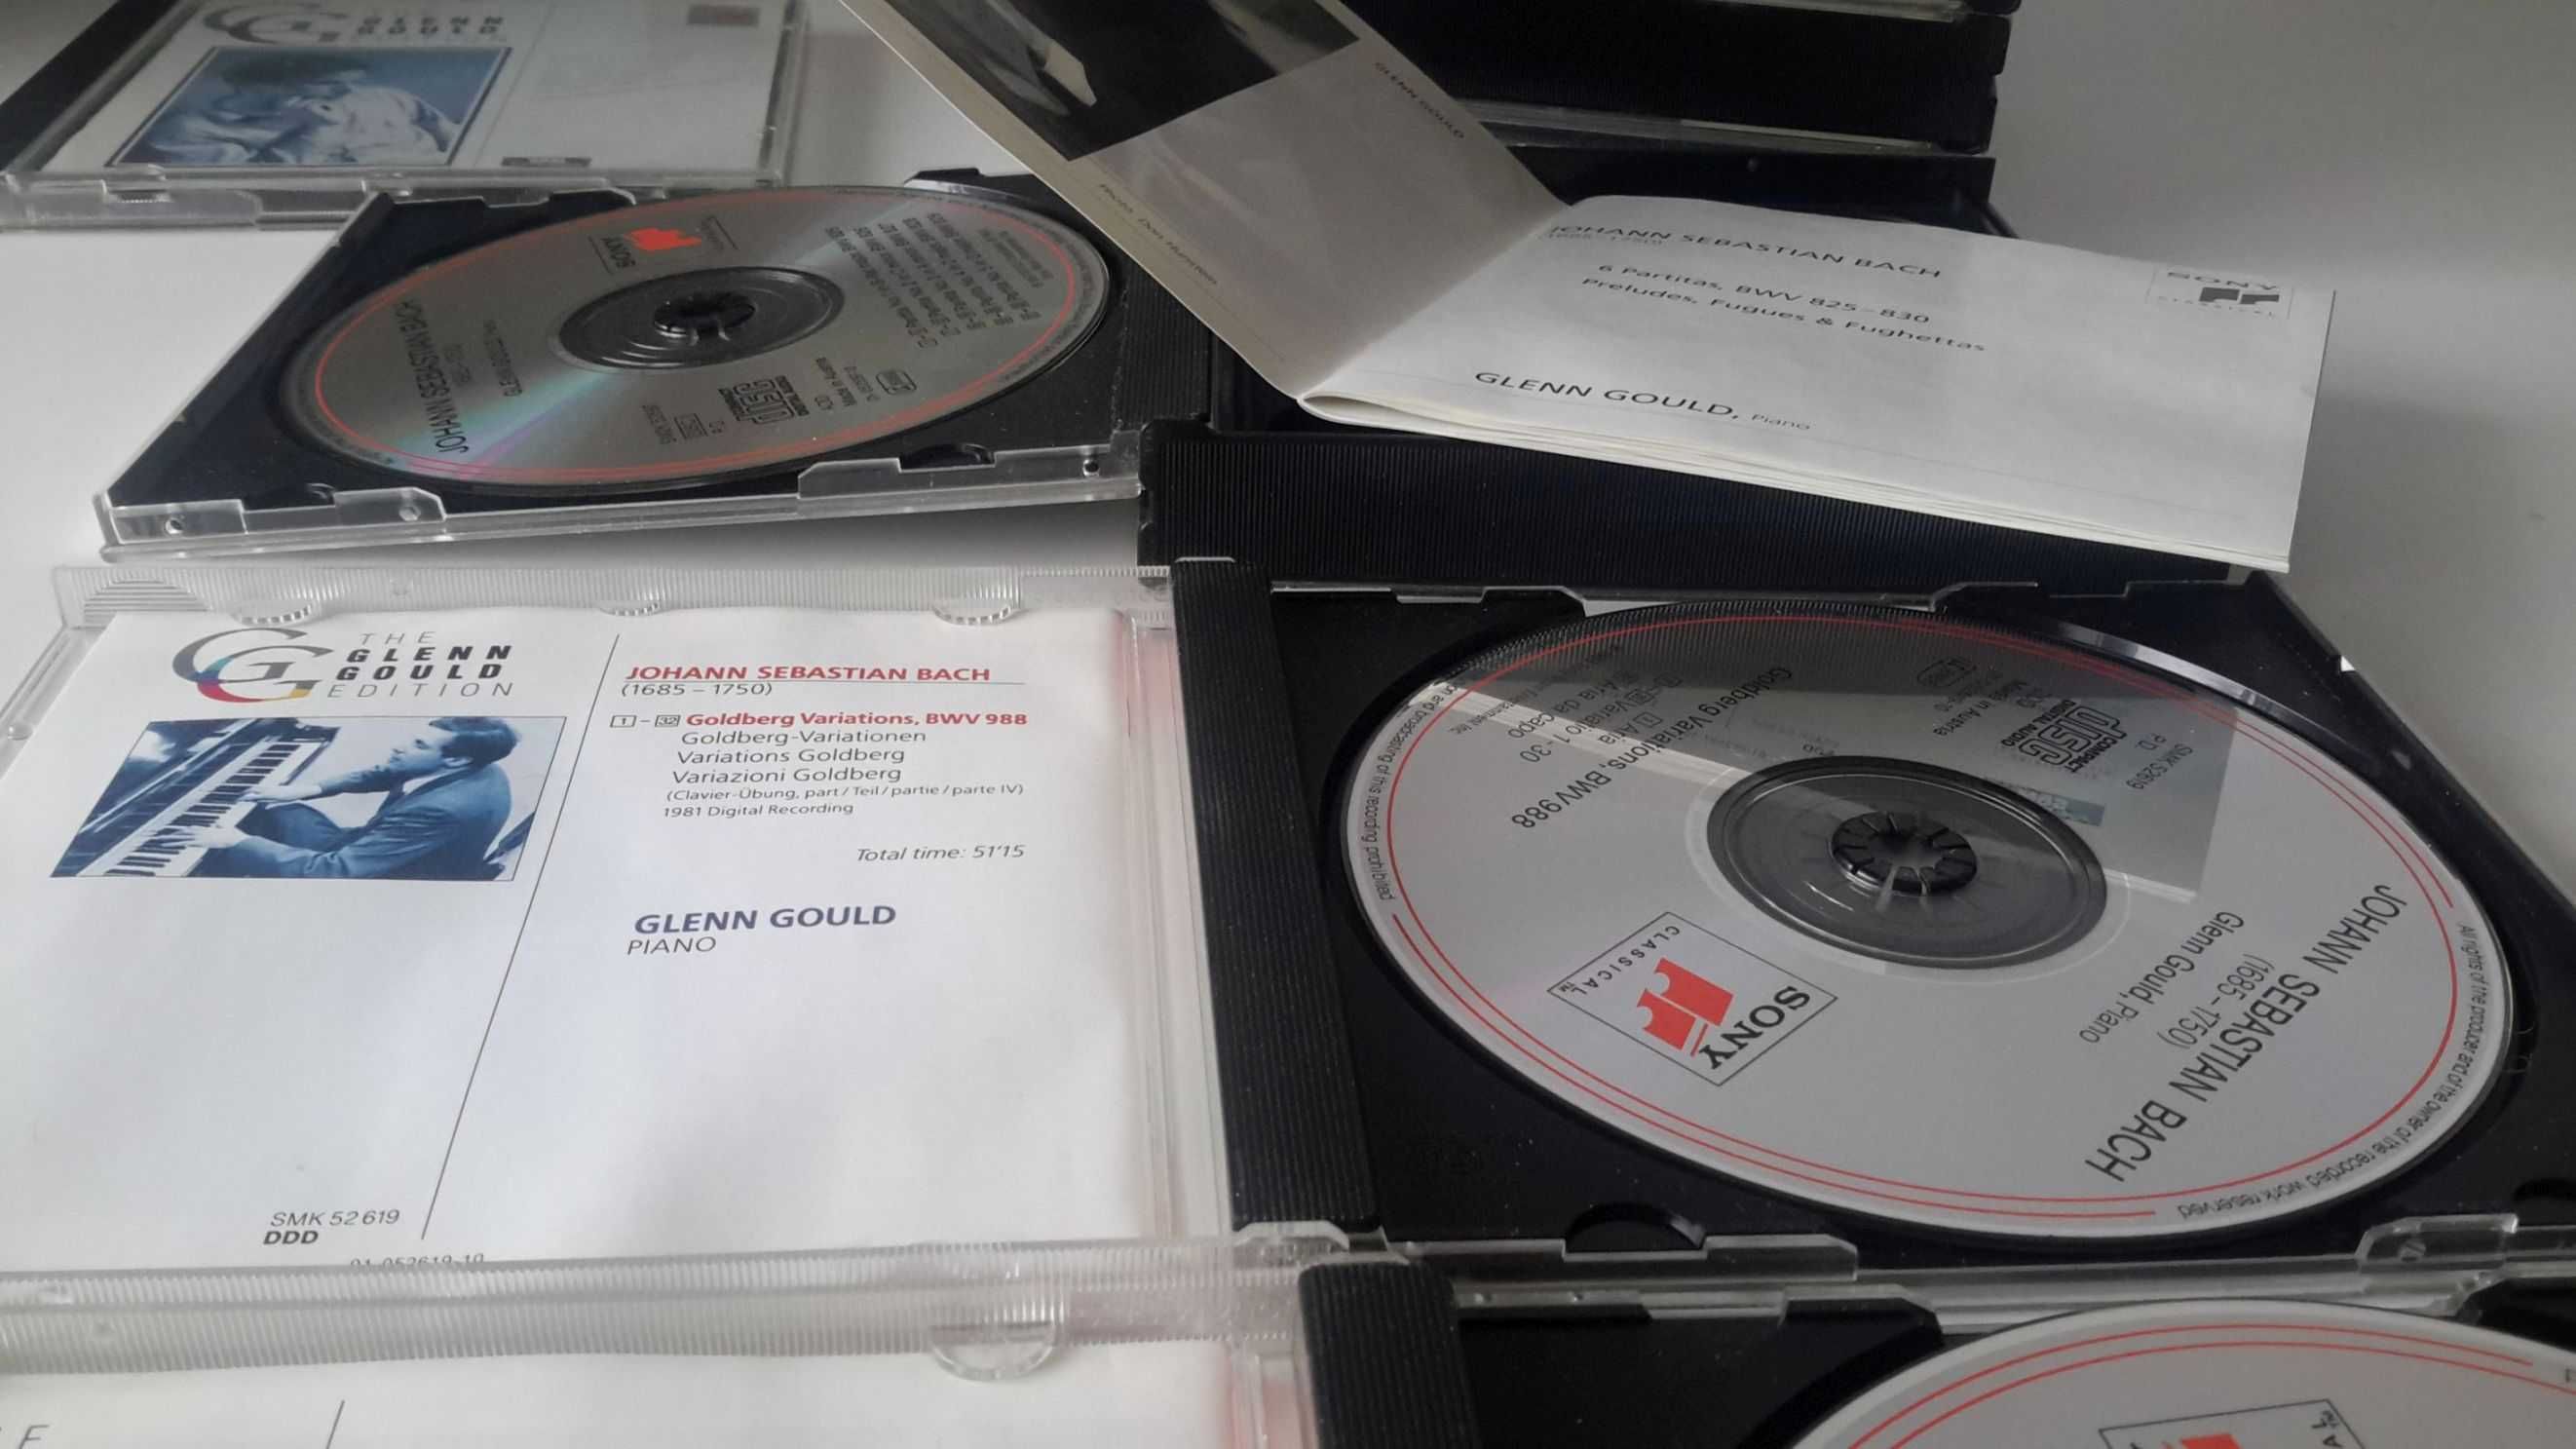 płyty CD z serii "The Glenn Gould Edition" [Sony]